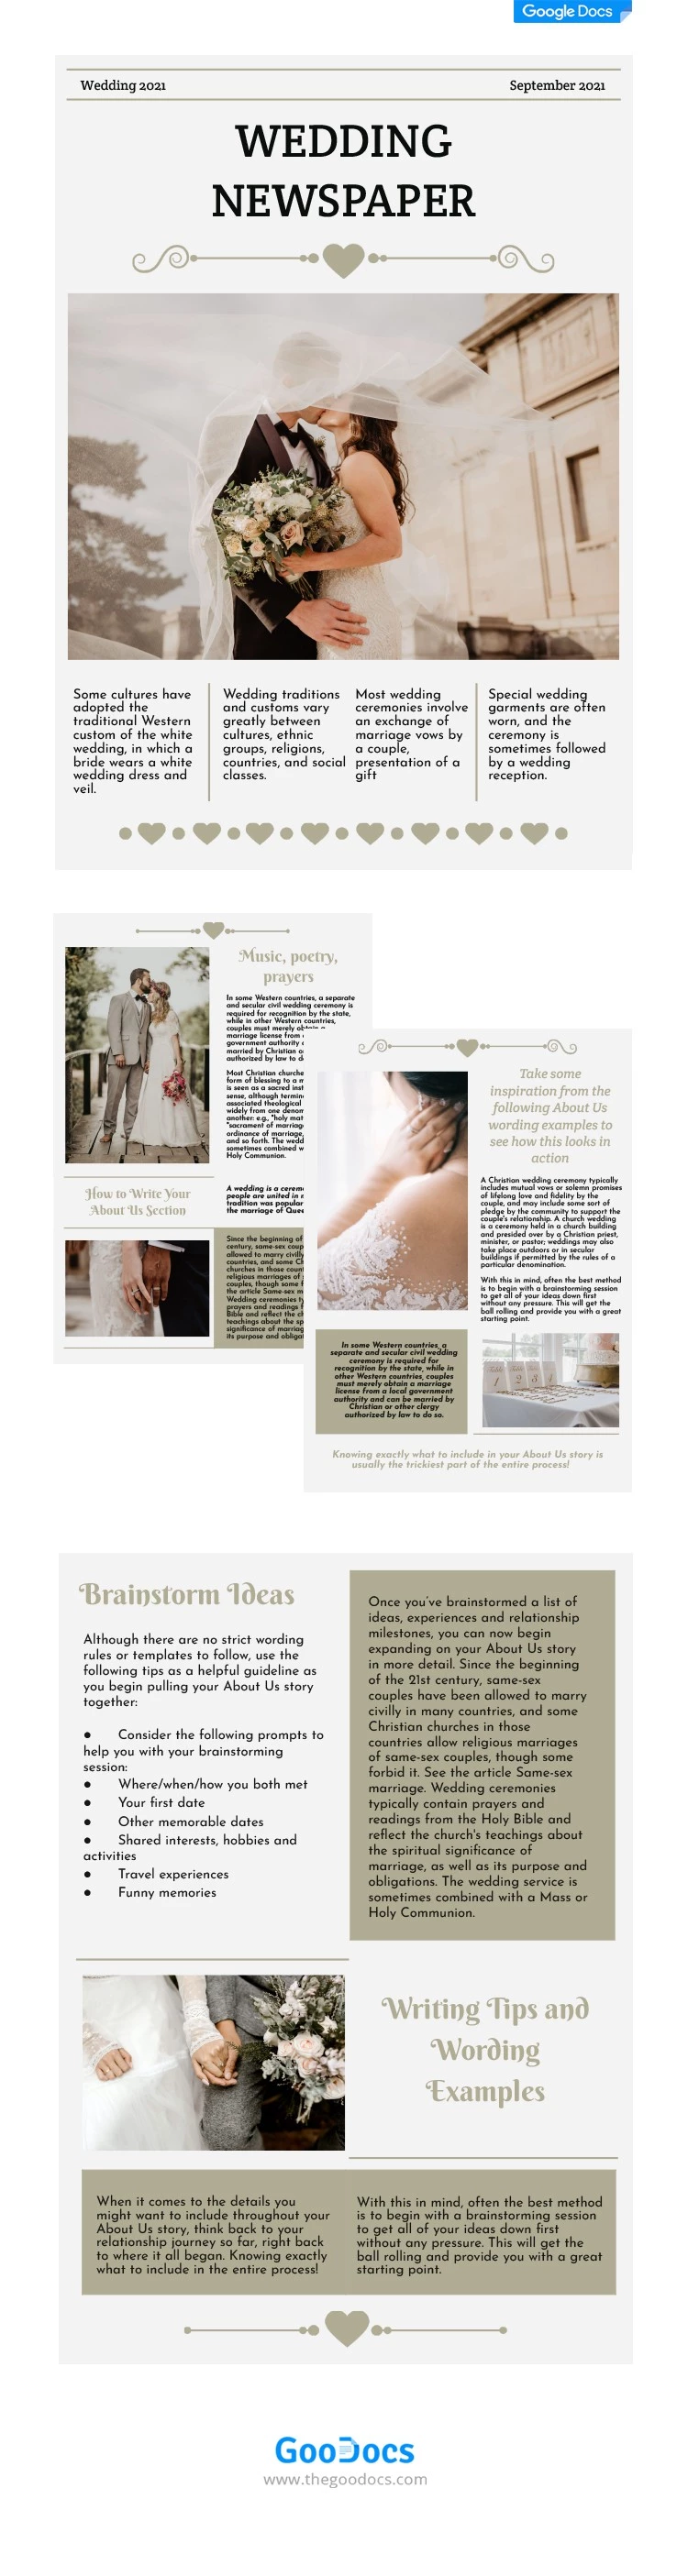 Beautiful Wedding Newspaper - free Google Docs Template - 10062031